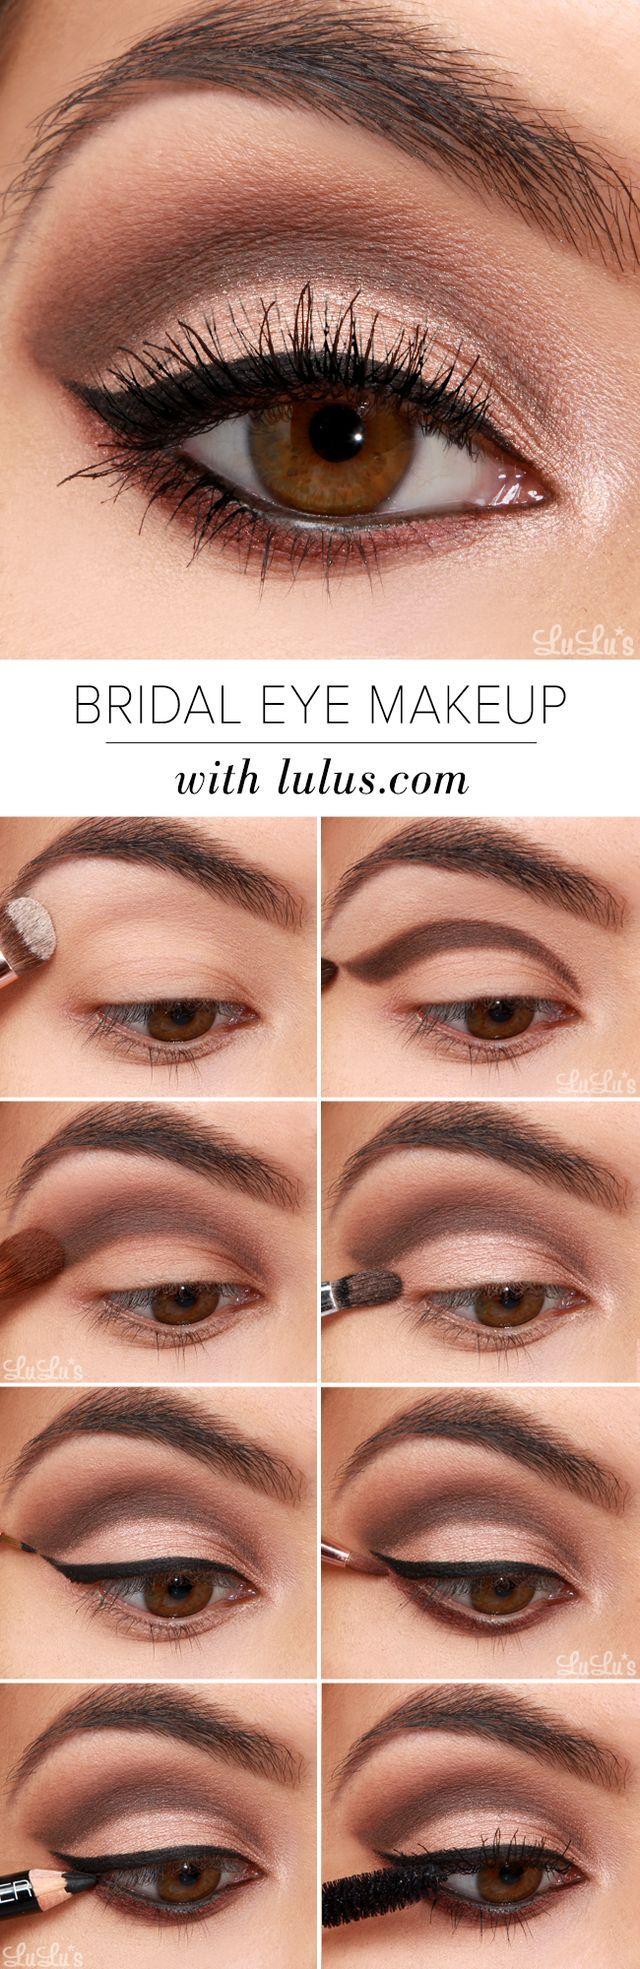 Hochzeit - LuLu*s How-To: Bridal Eye Makeup Tutorial (Lulus.com Fashion Blog)